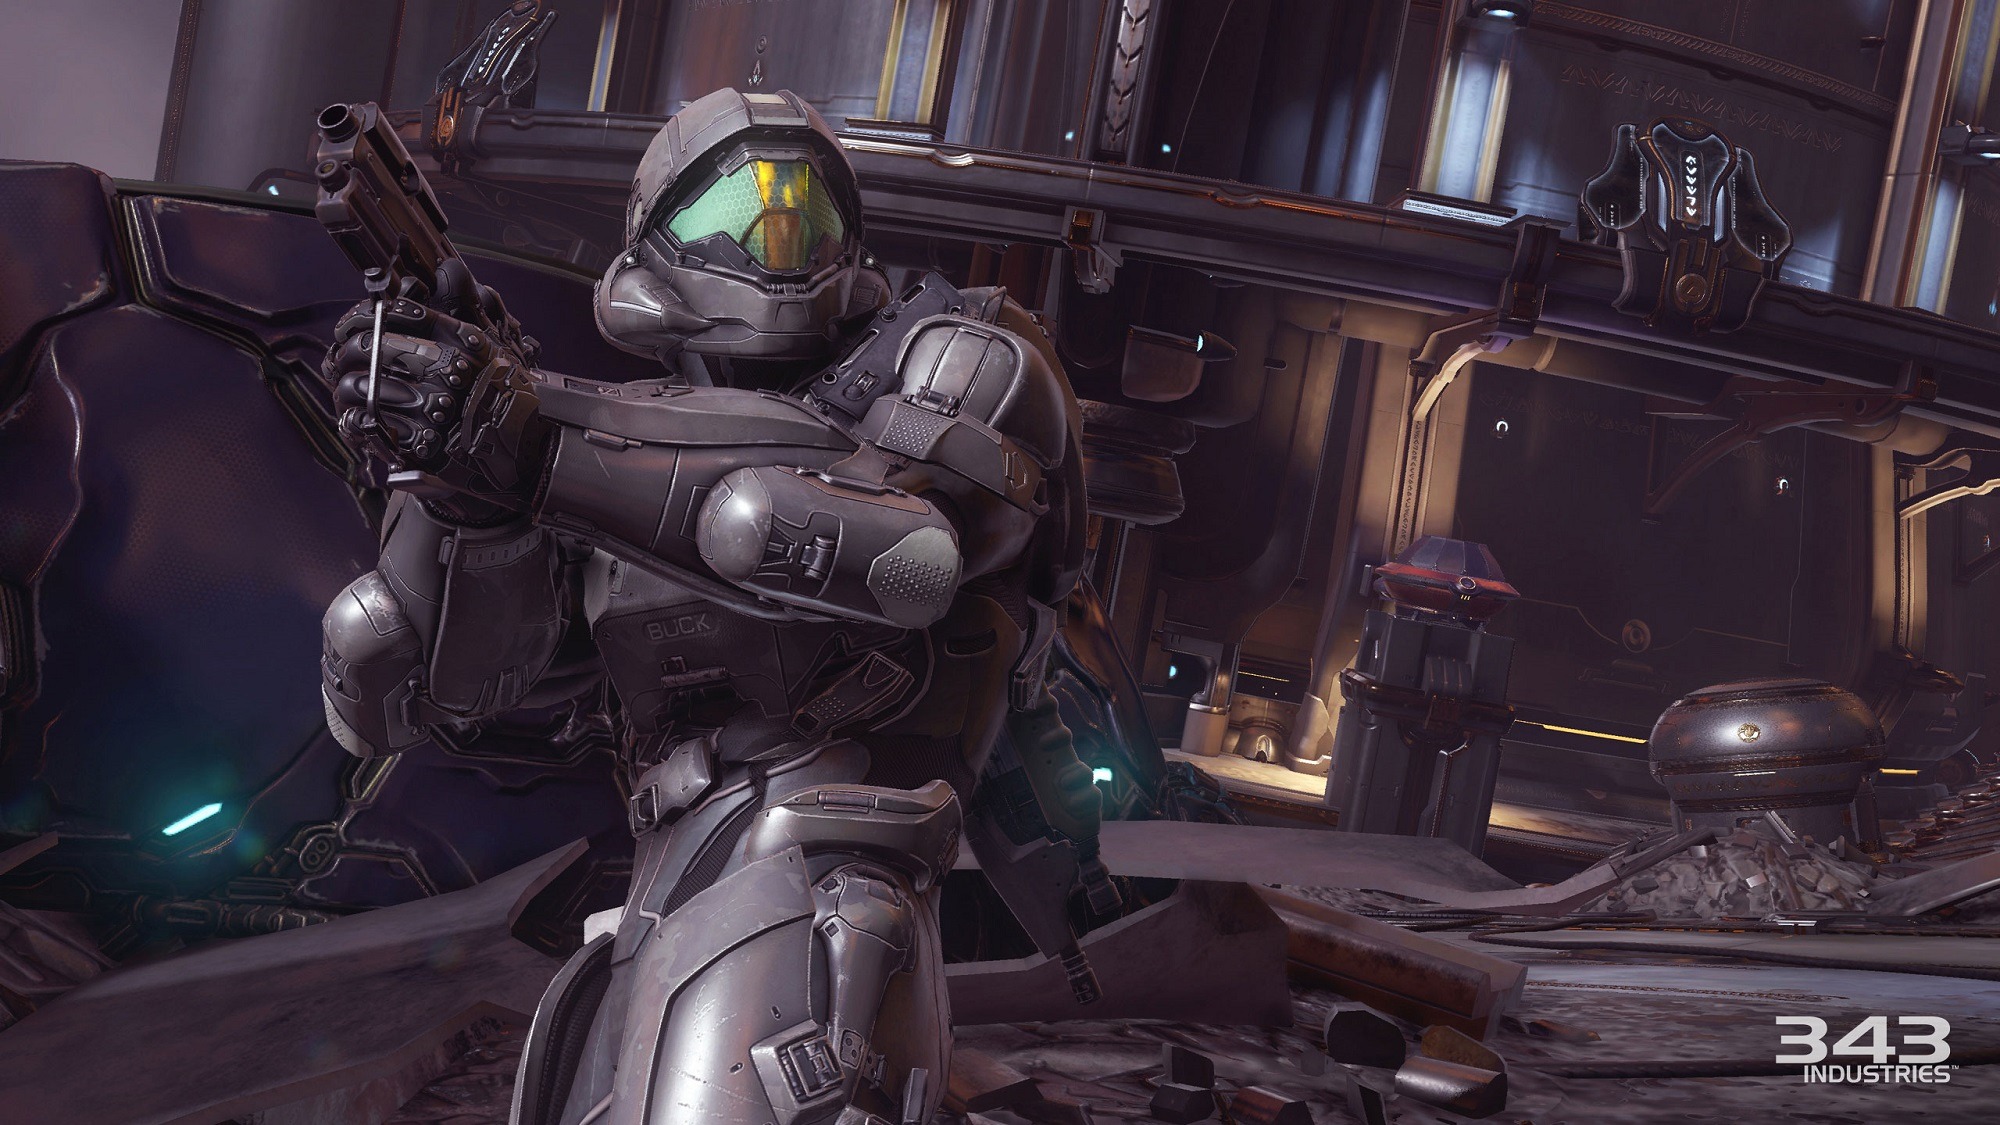 Halo 5 Guardians Esrbレーティングでシリーズ初のティーン指定に Game Spark 国内 海外ゲーム情報サイト